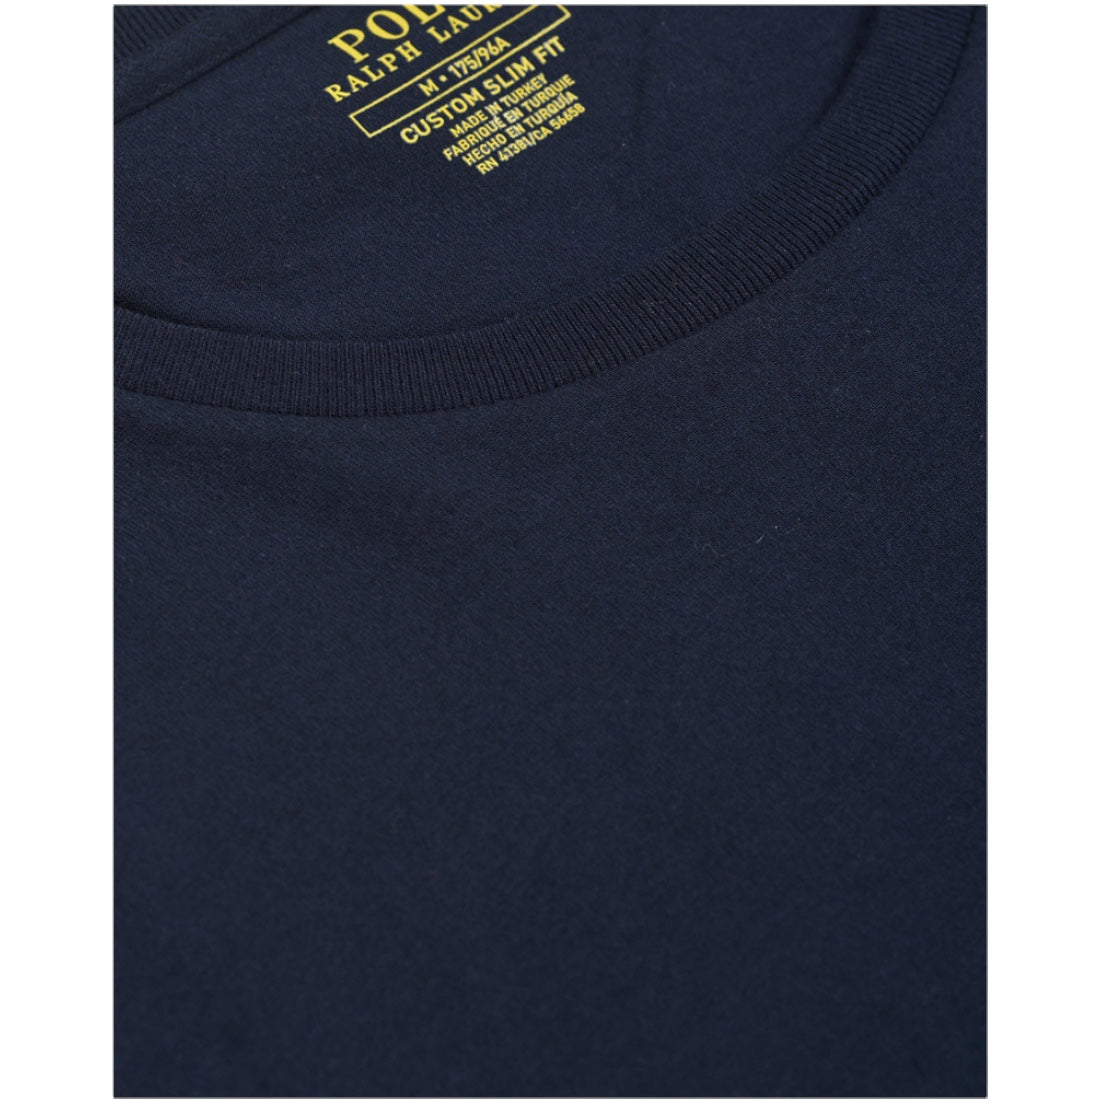 Polo Ralph Lauren Custom Slim Fit Langarm-T-Shirt Marineblau